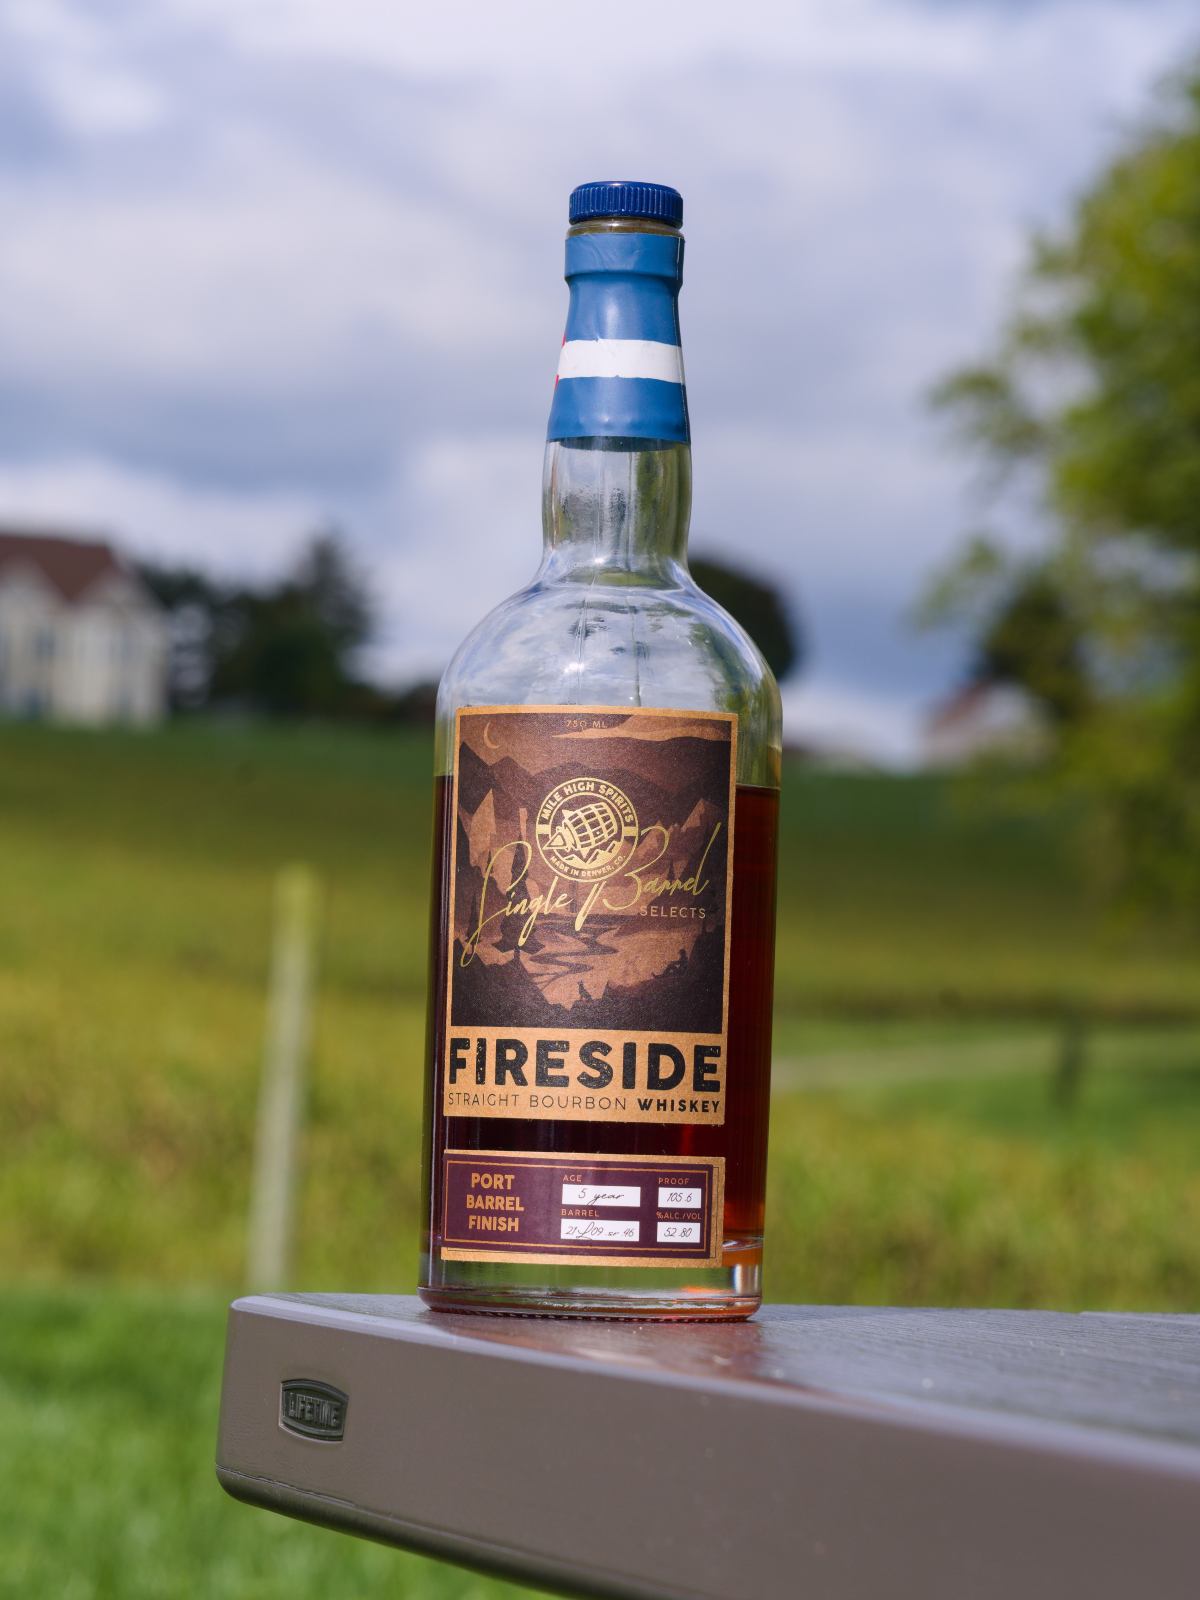 Fireside port barrel finish bourbon featured